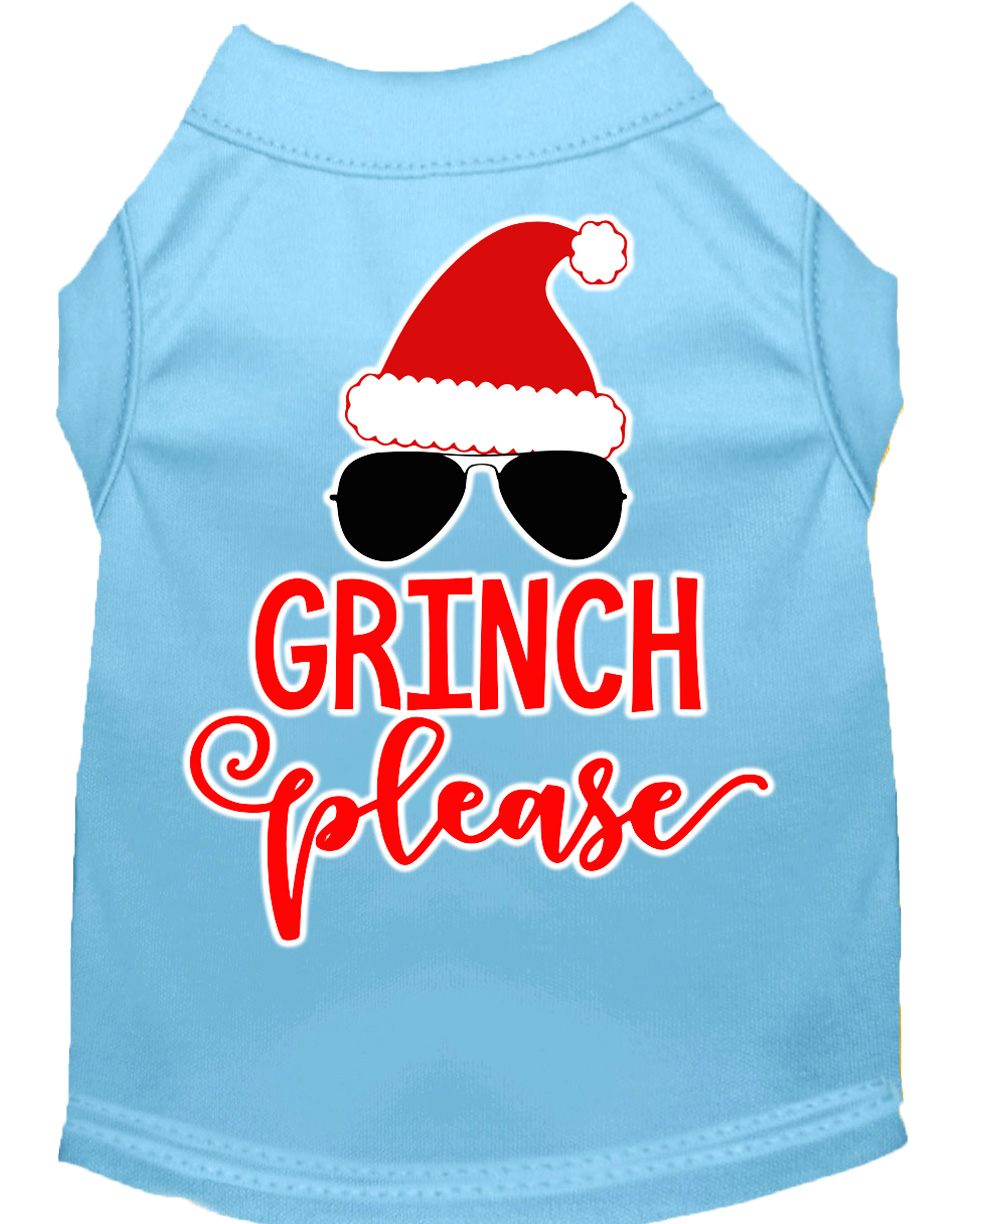 Grinch Please Screen Print Dog Shirt Baby Blue XL